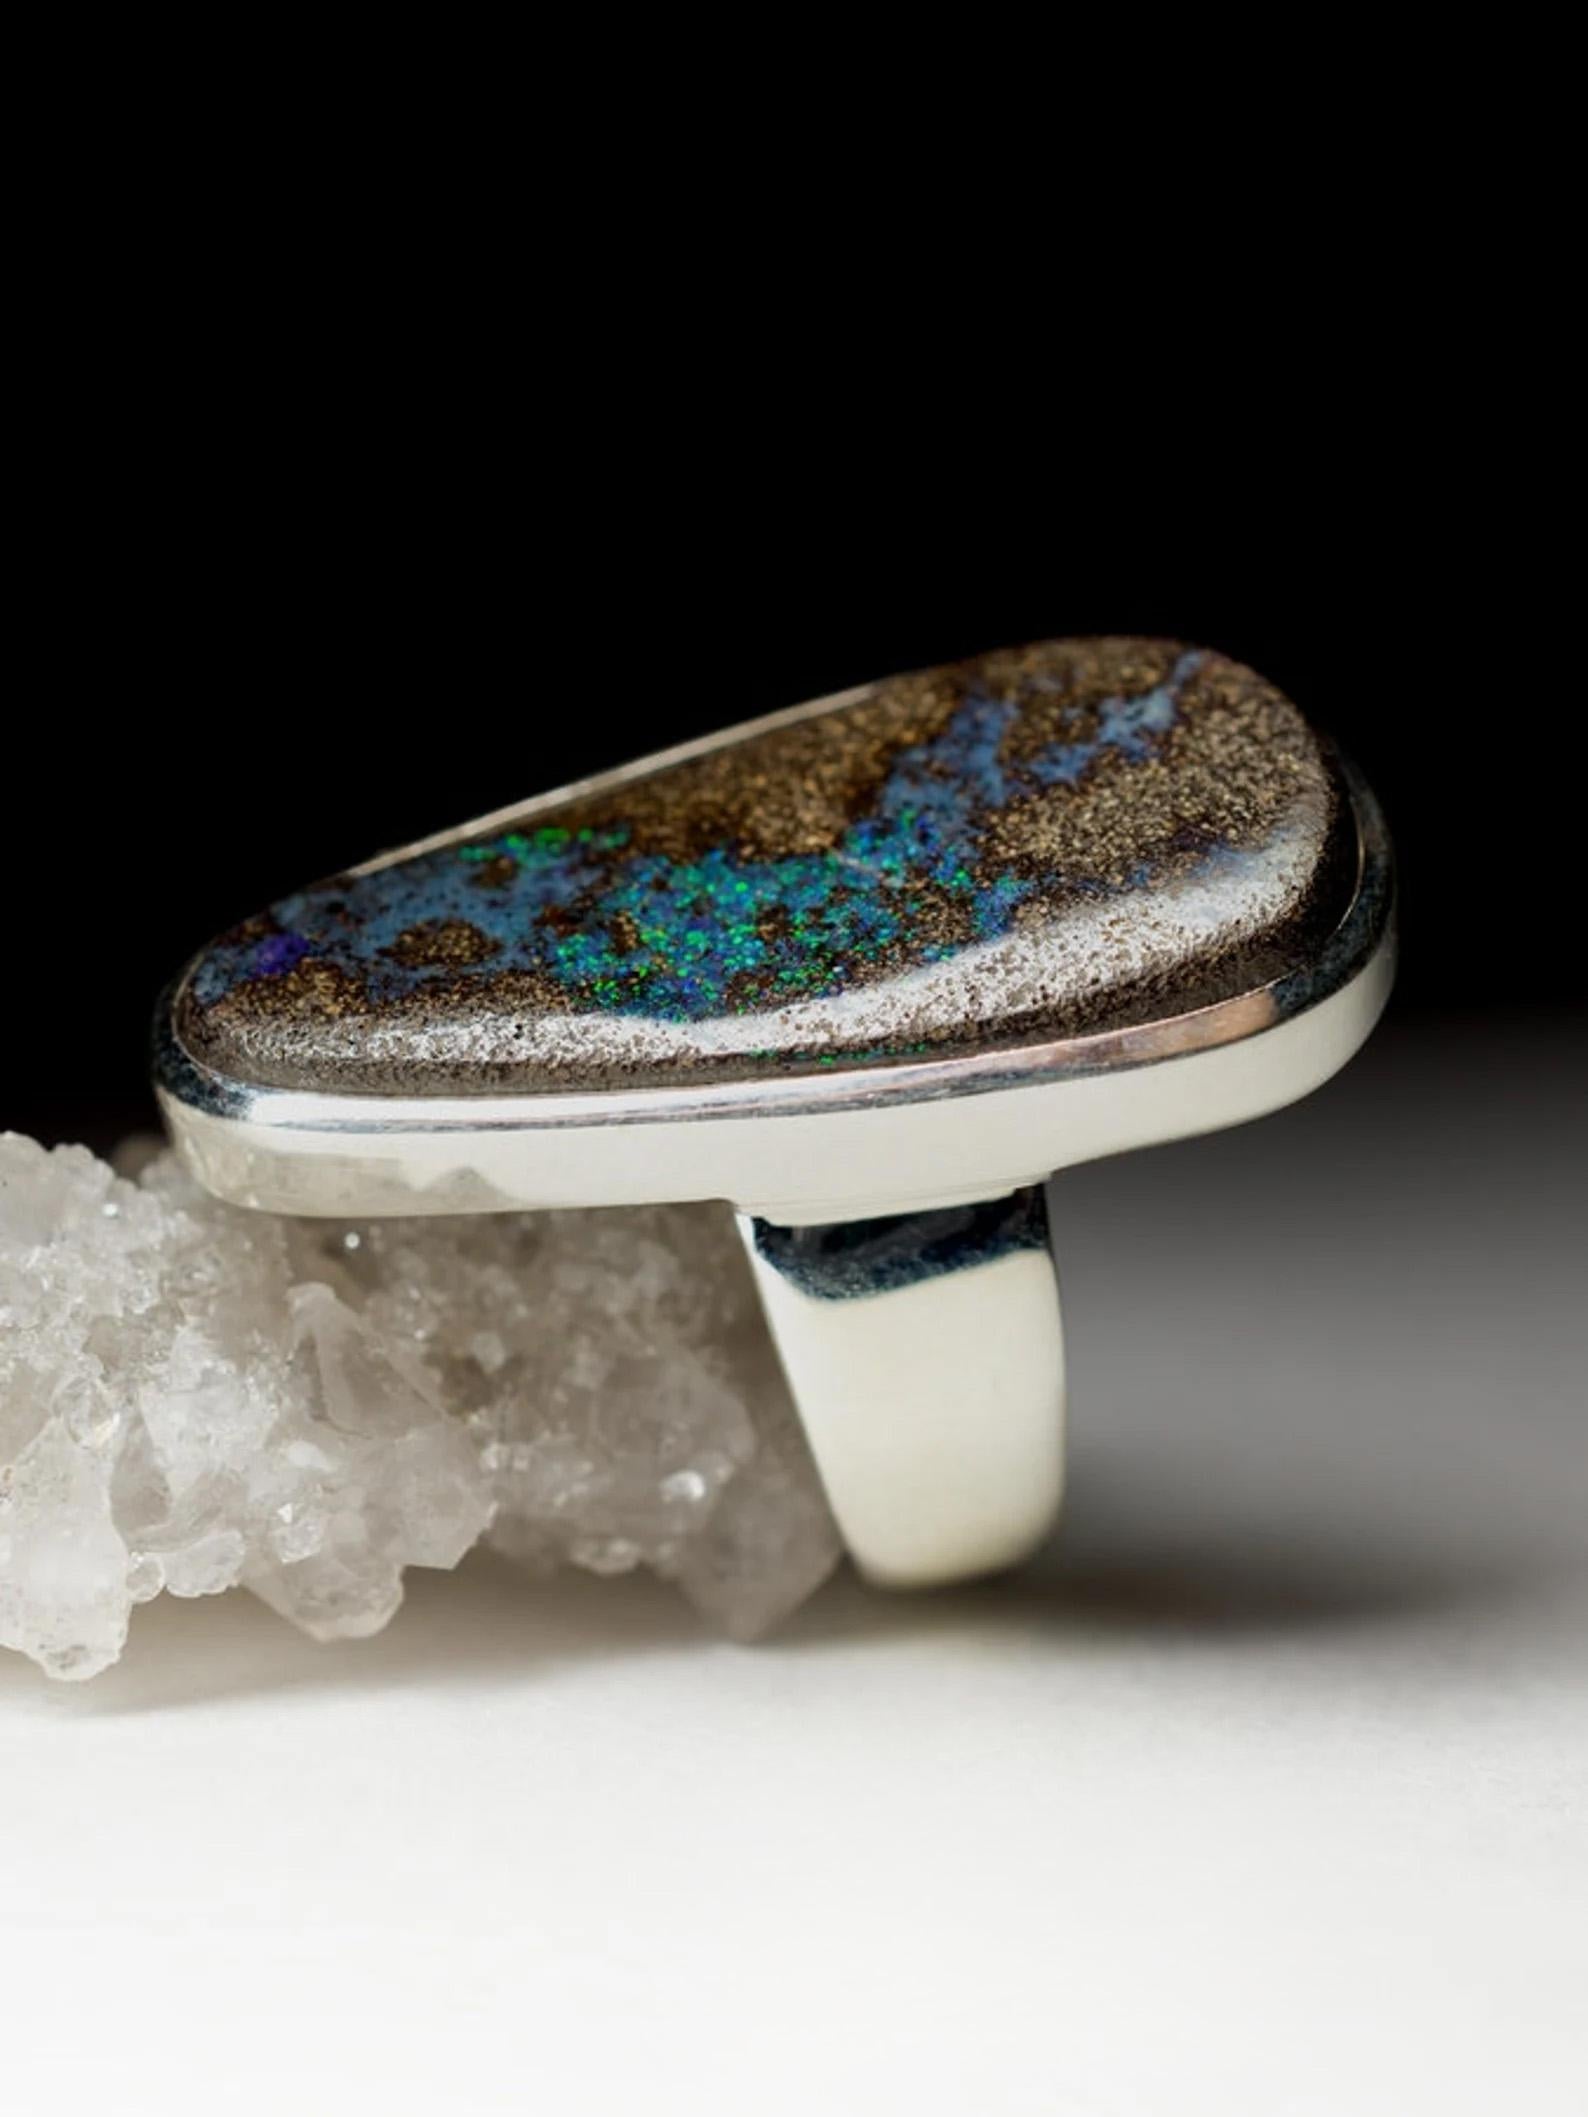 Big silver ring with natural Boulder Opal 
gemstone origin - Australia
gemstone weight - 23.40 carat
ring weight - 12.39 grams
ring size - 7.5 US 
gemstone size - 0.2 х 0.67 x 1.34 in / 5 х 17 х 34 mm